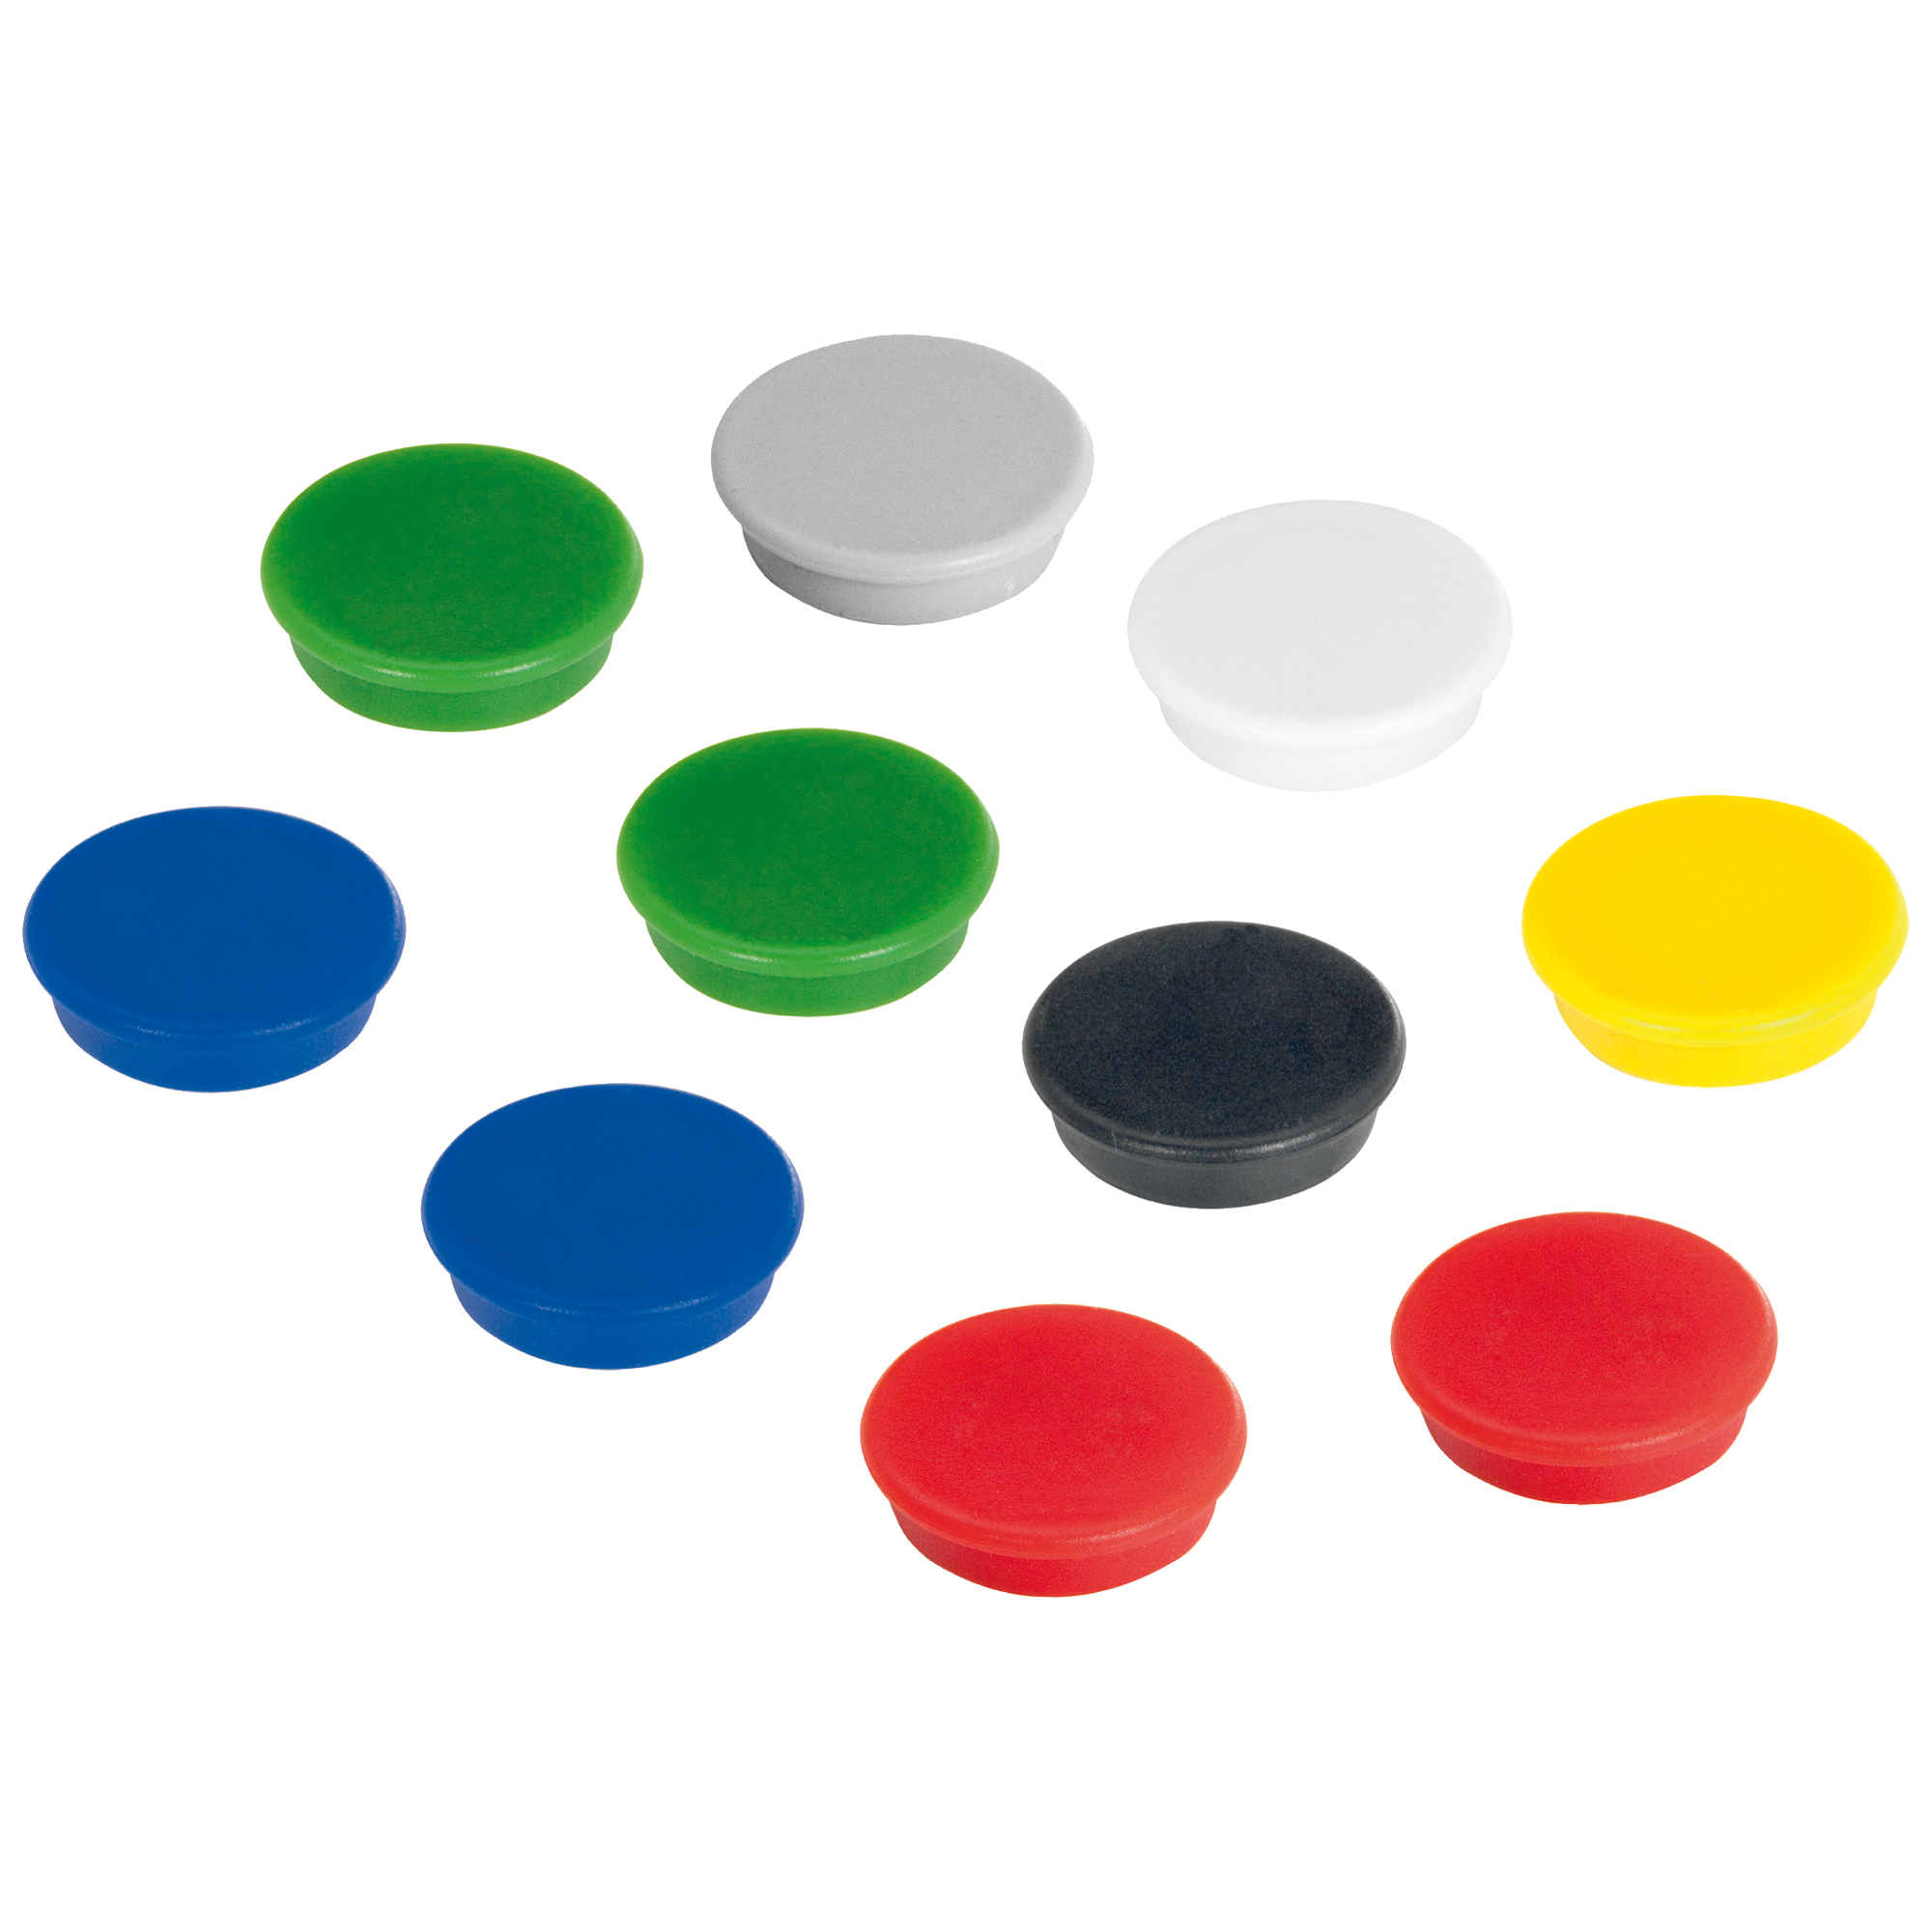 Pro/Office Magnet 32 mm verschiedene Farben, sortiert